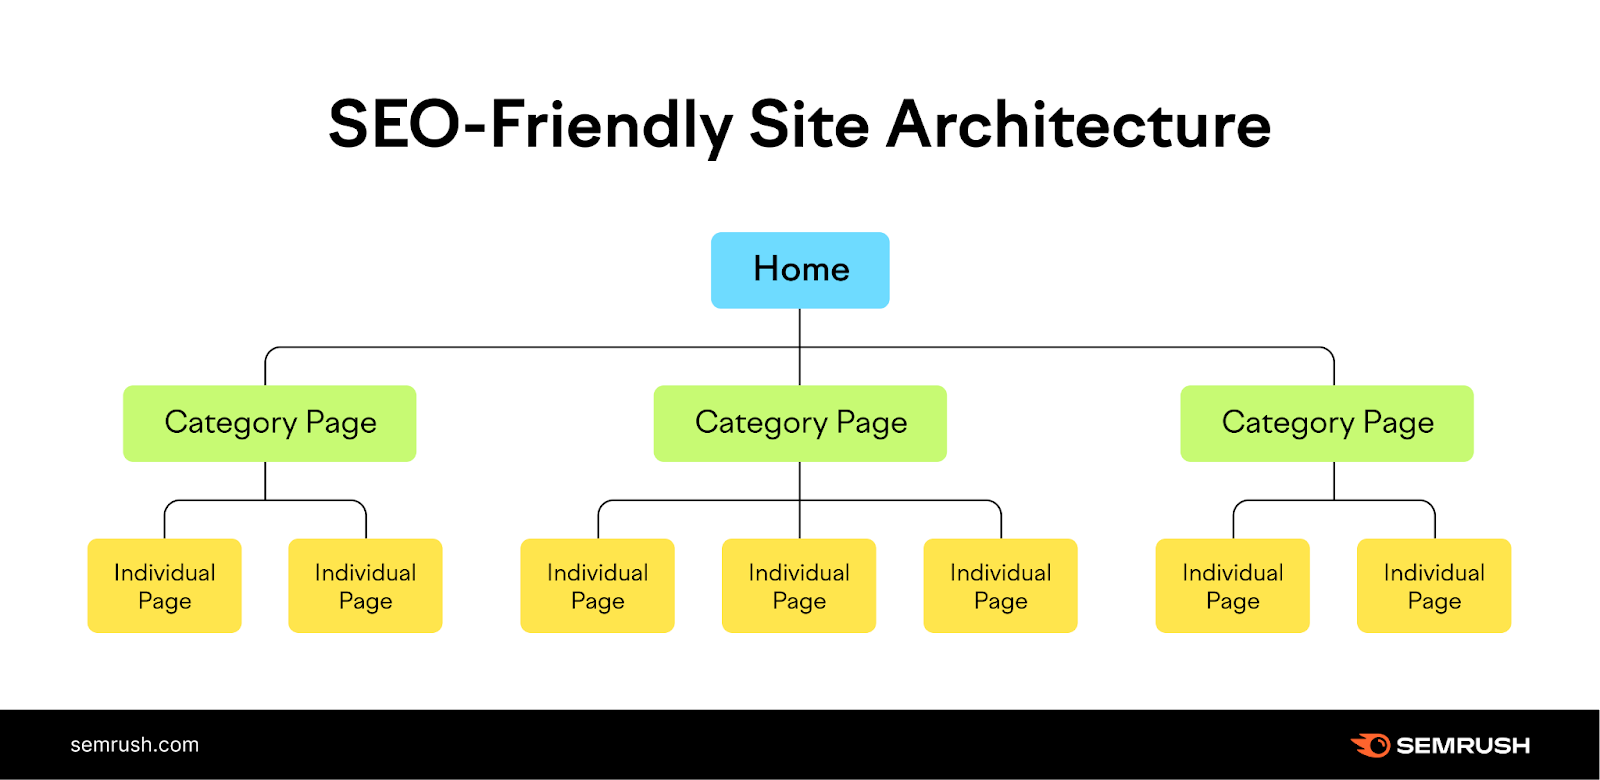 "SEO-friendly site architecture" infographic